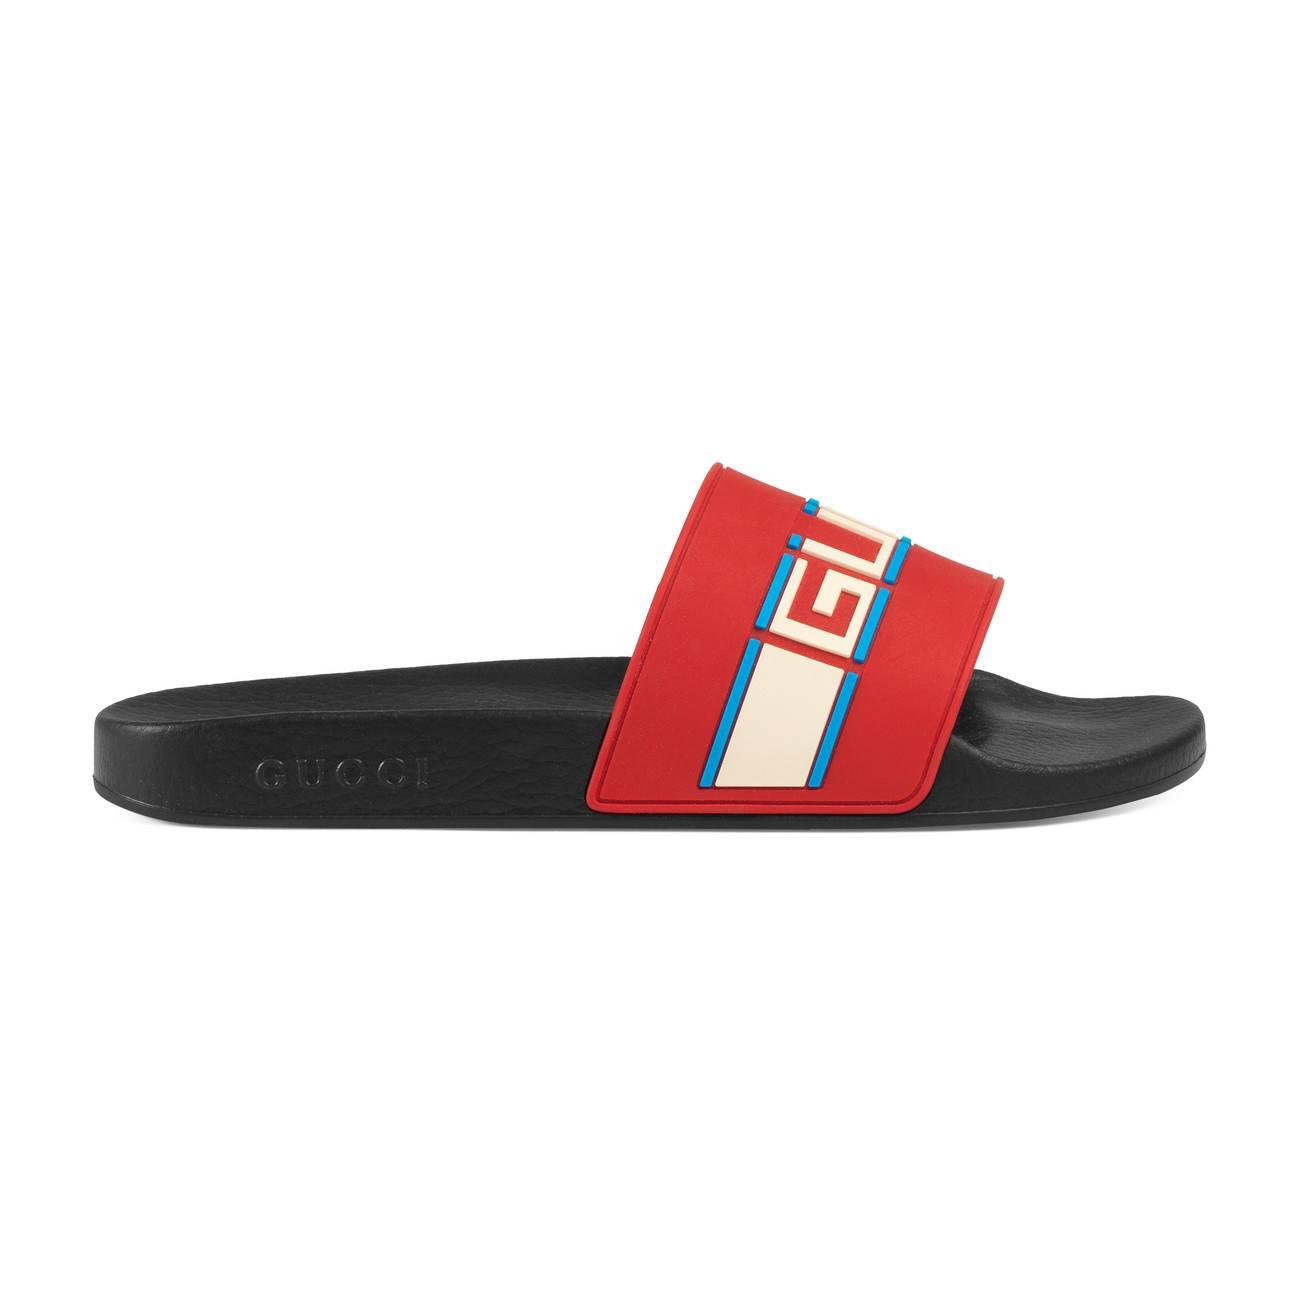 Lyst - Gucci Stripe Rubber Slide Sandal in Red for Men - Save 27%